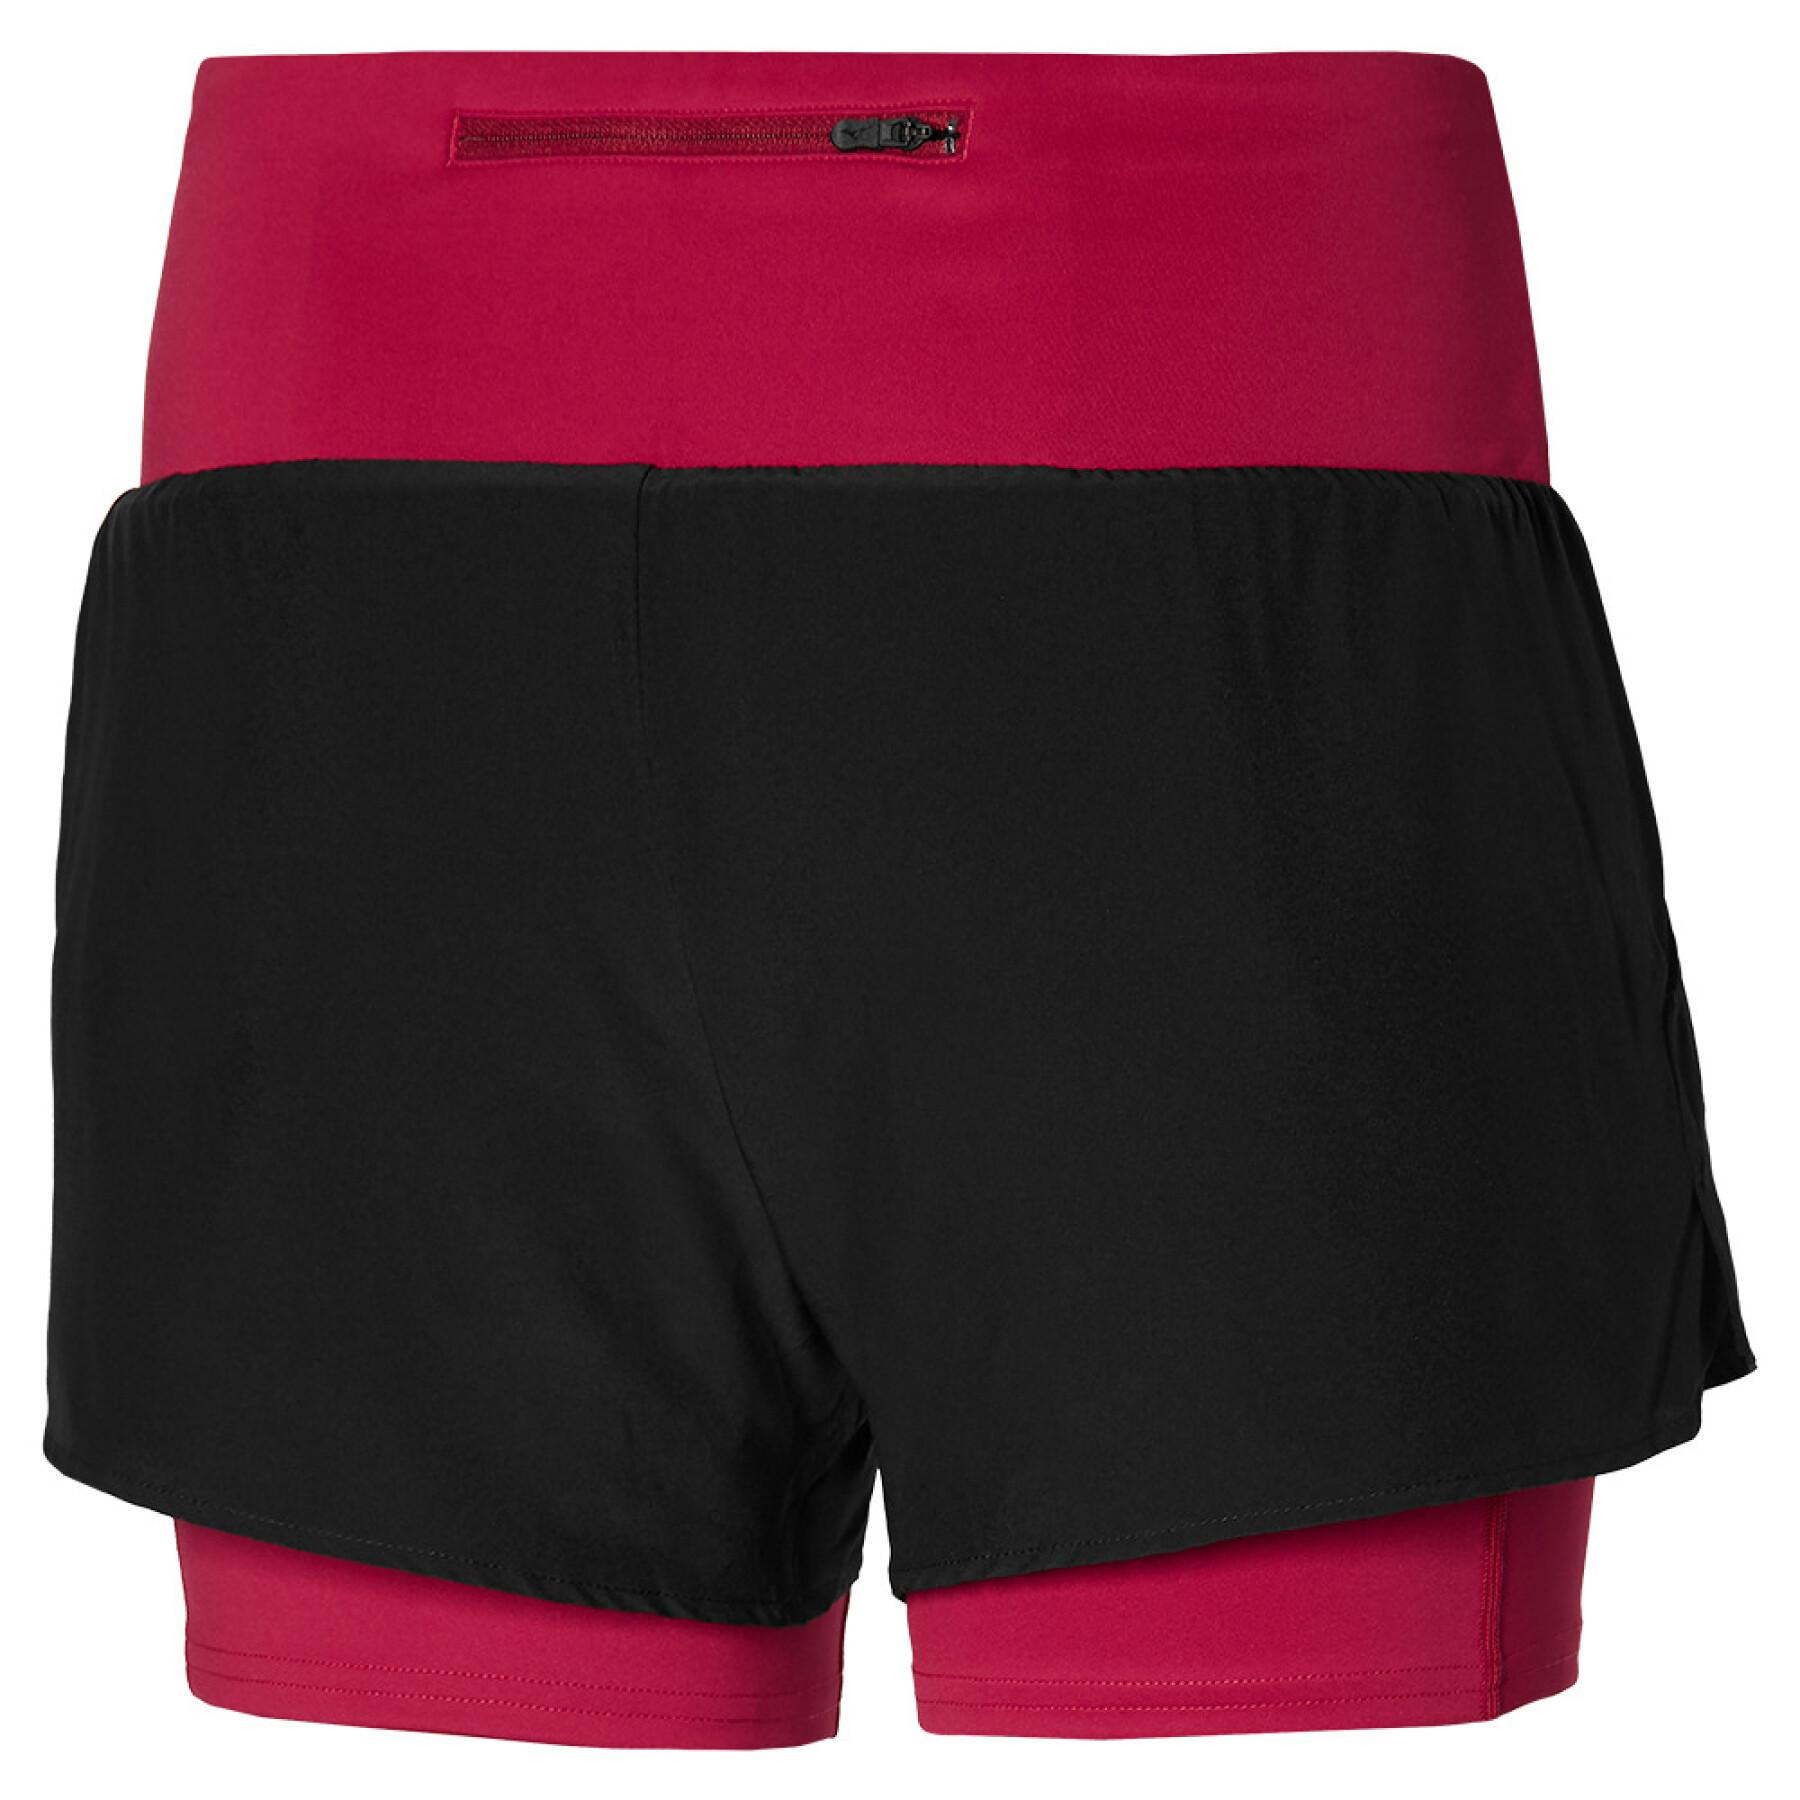 Women's shorts Mizuno 2in1 4.5